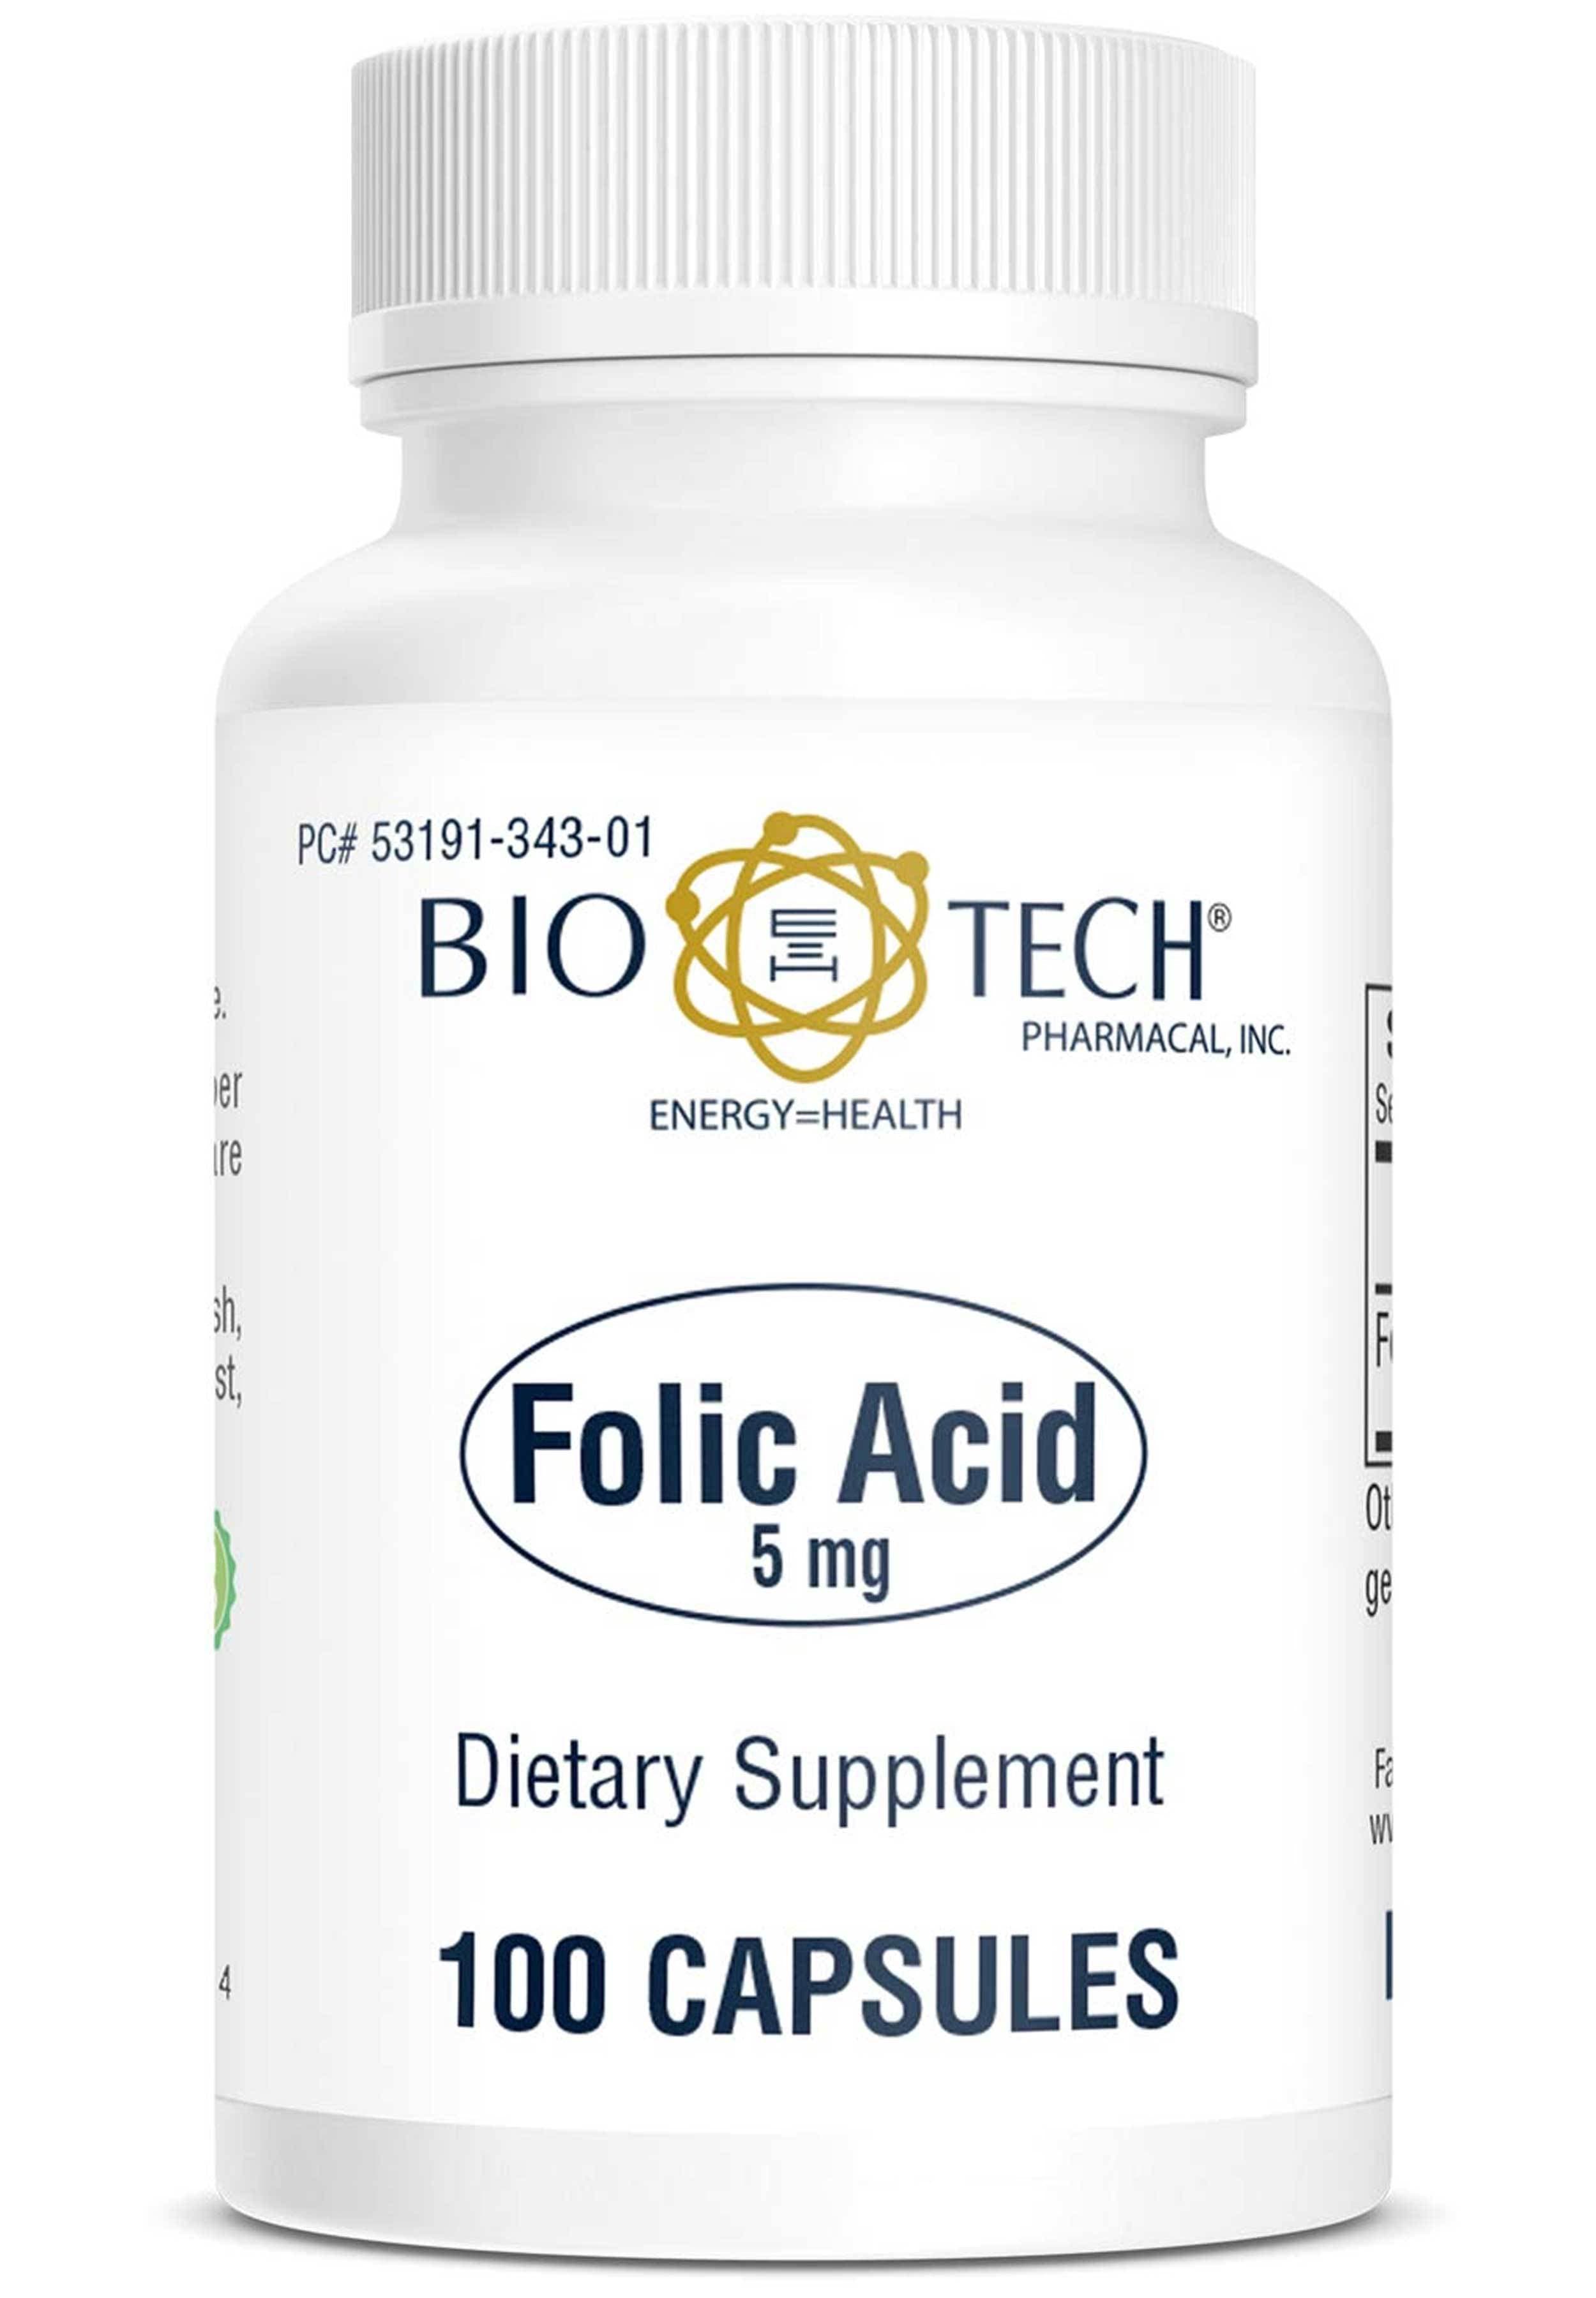 Bio-Tech Pharmacal Folic Acid (5 mg)